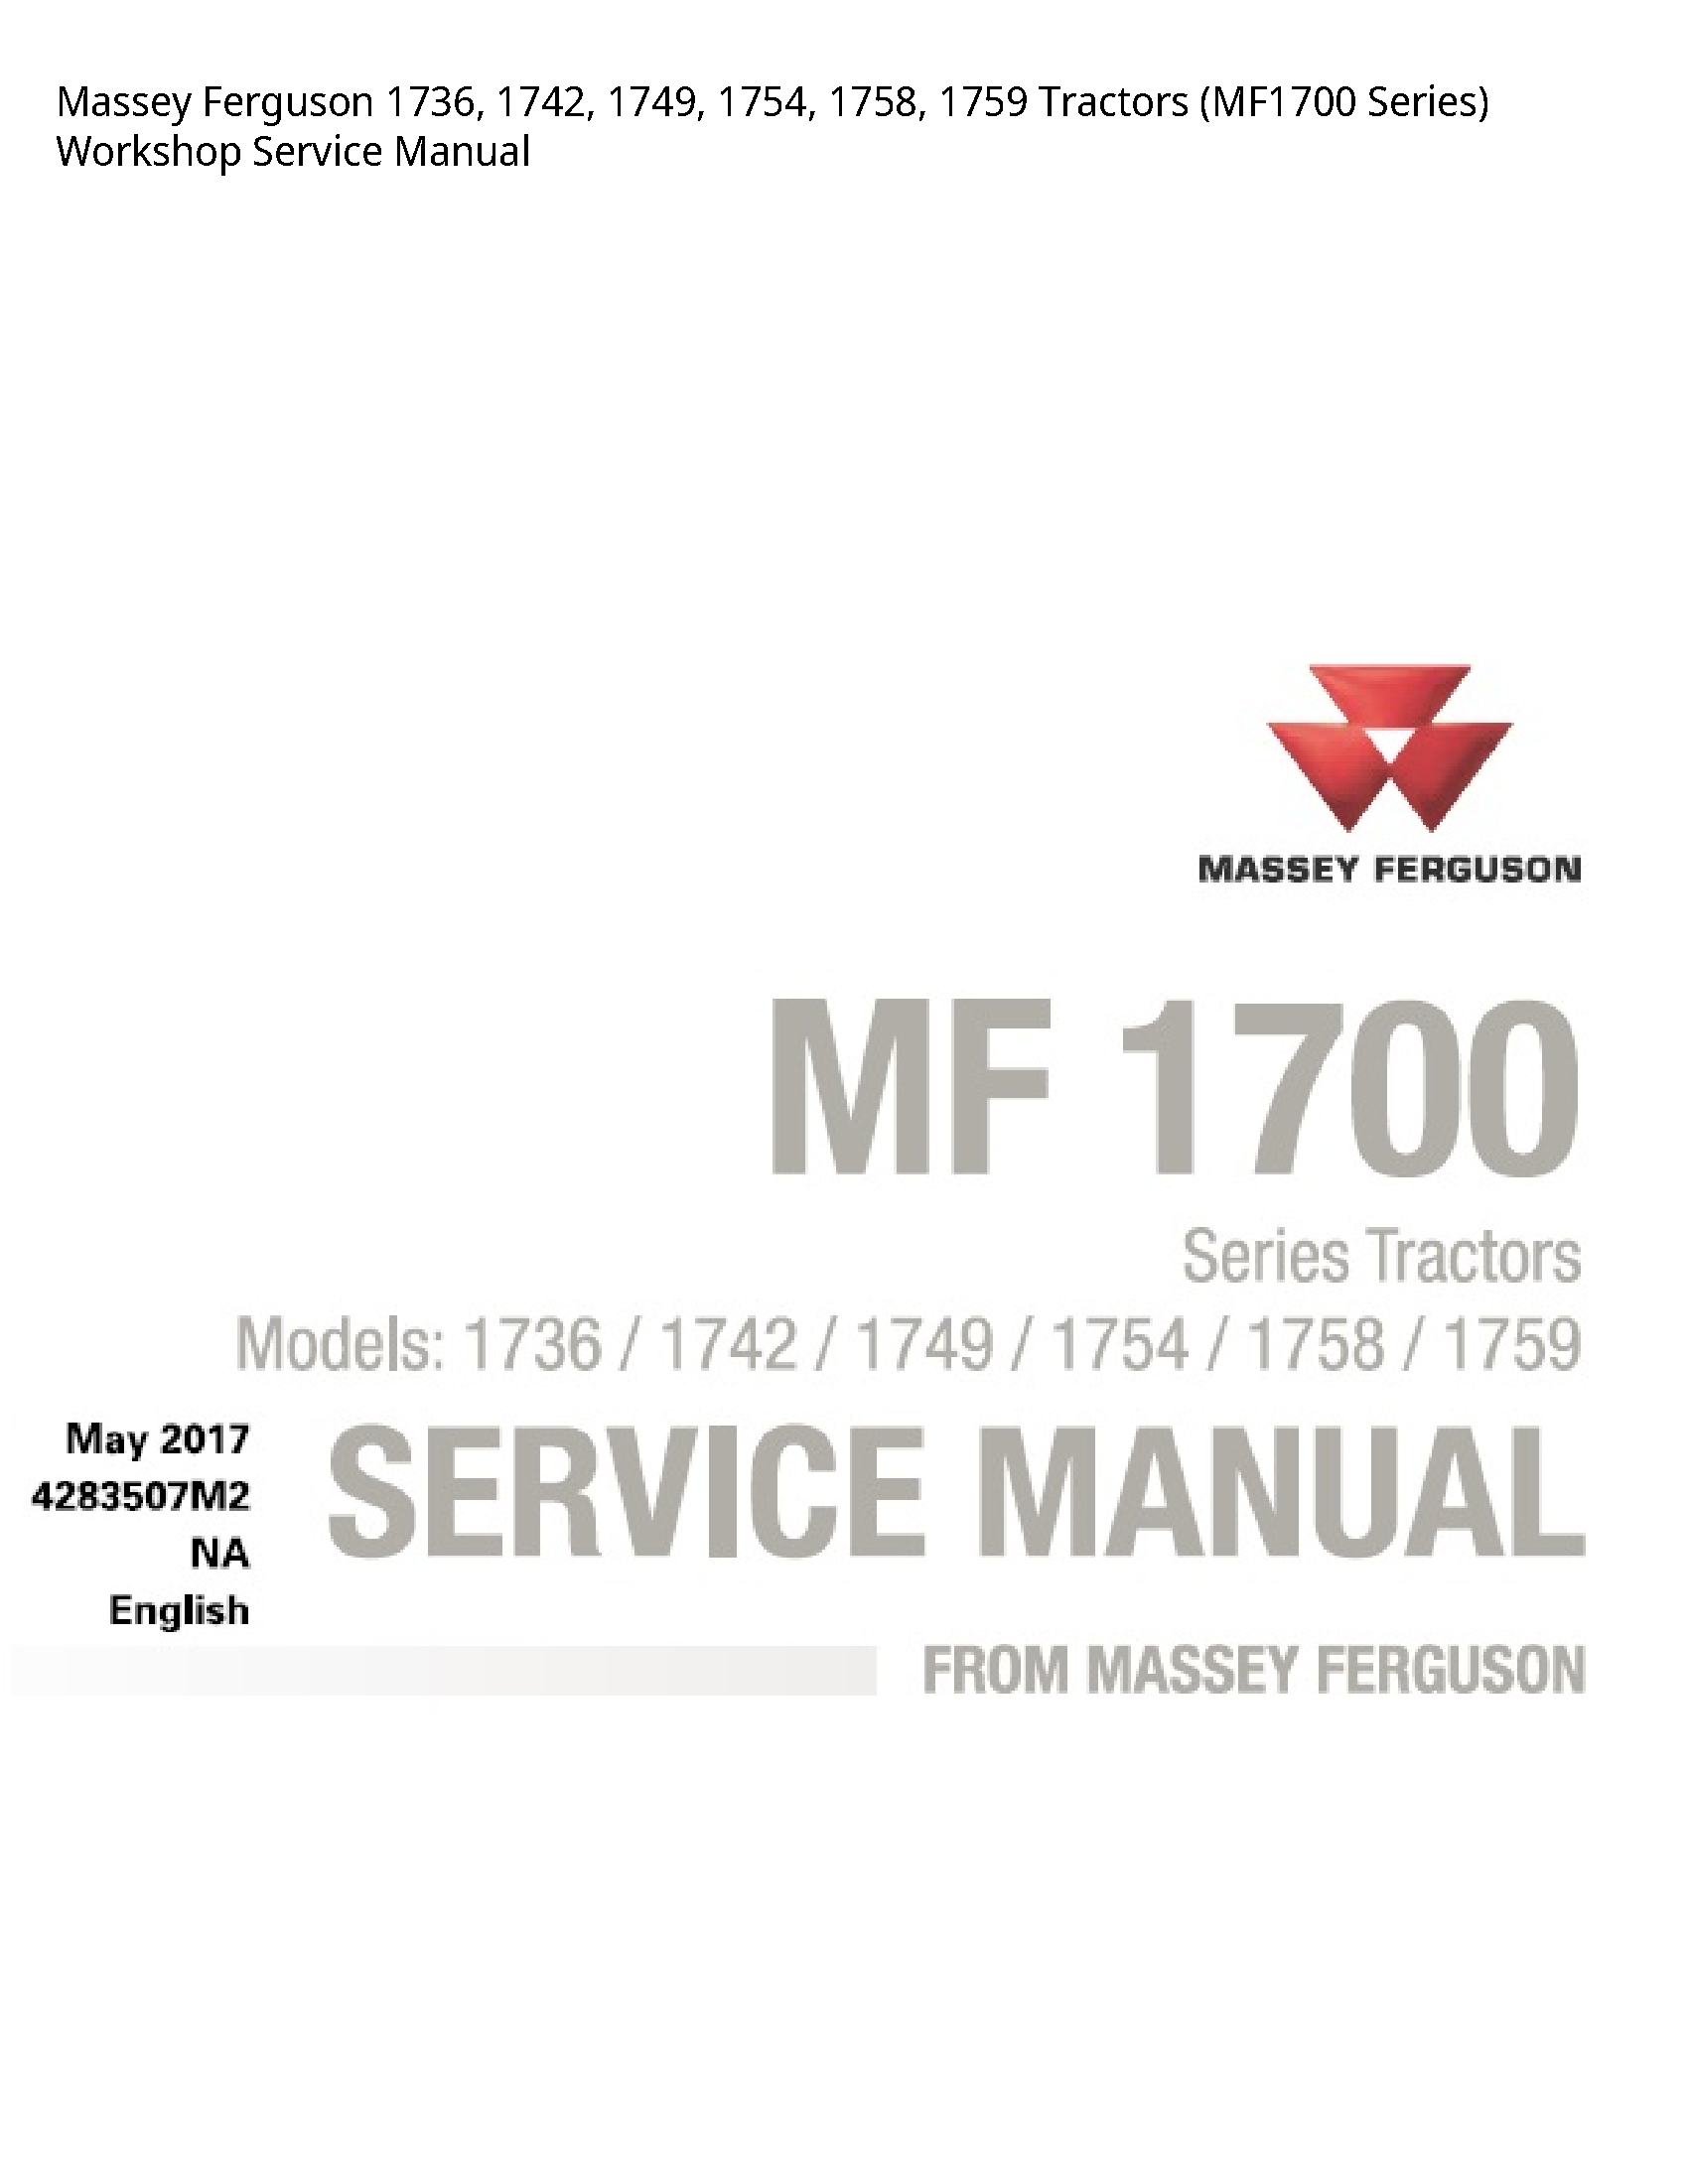 Massey Ferguson 1736 Tractors Series) Service manual